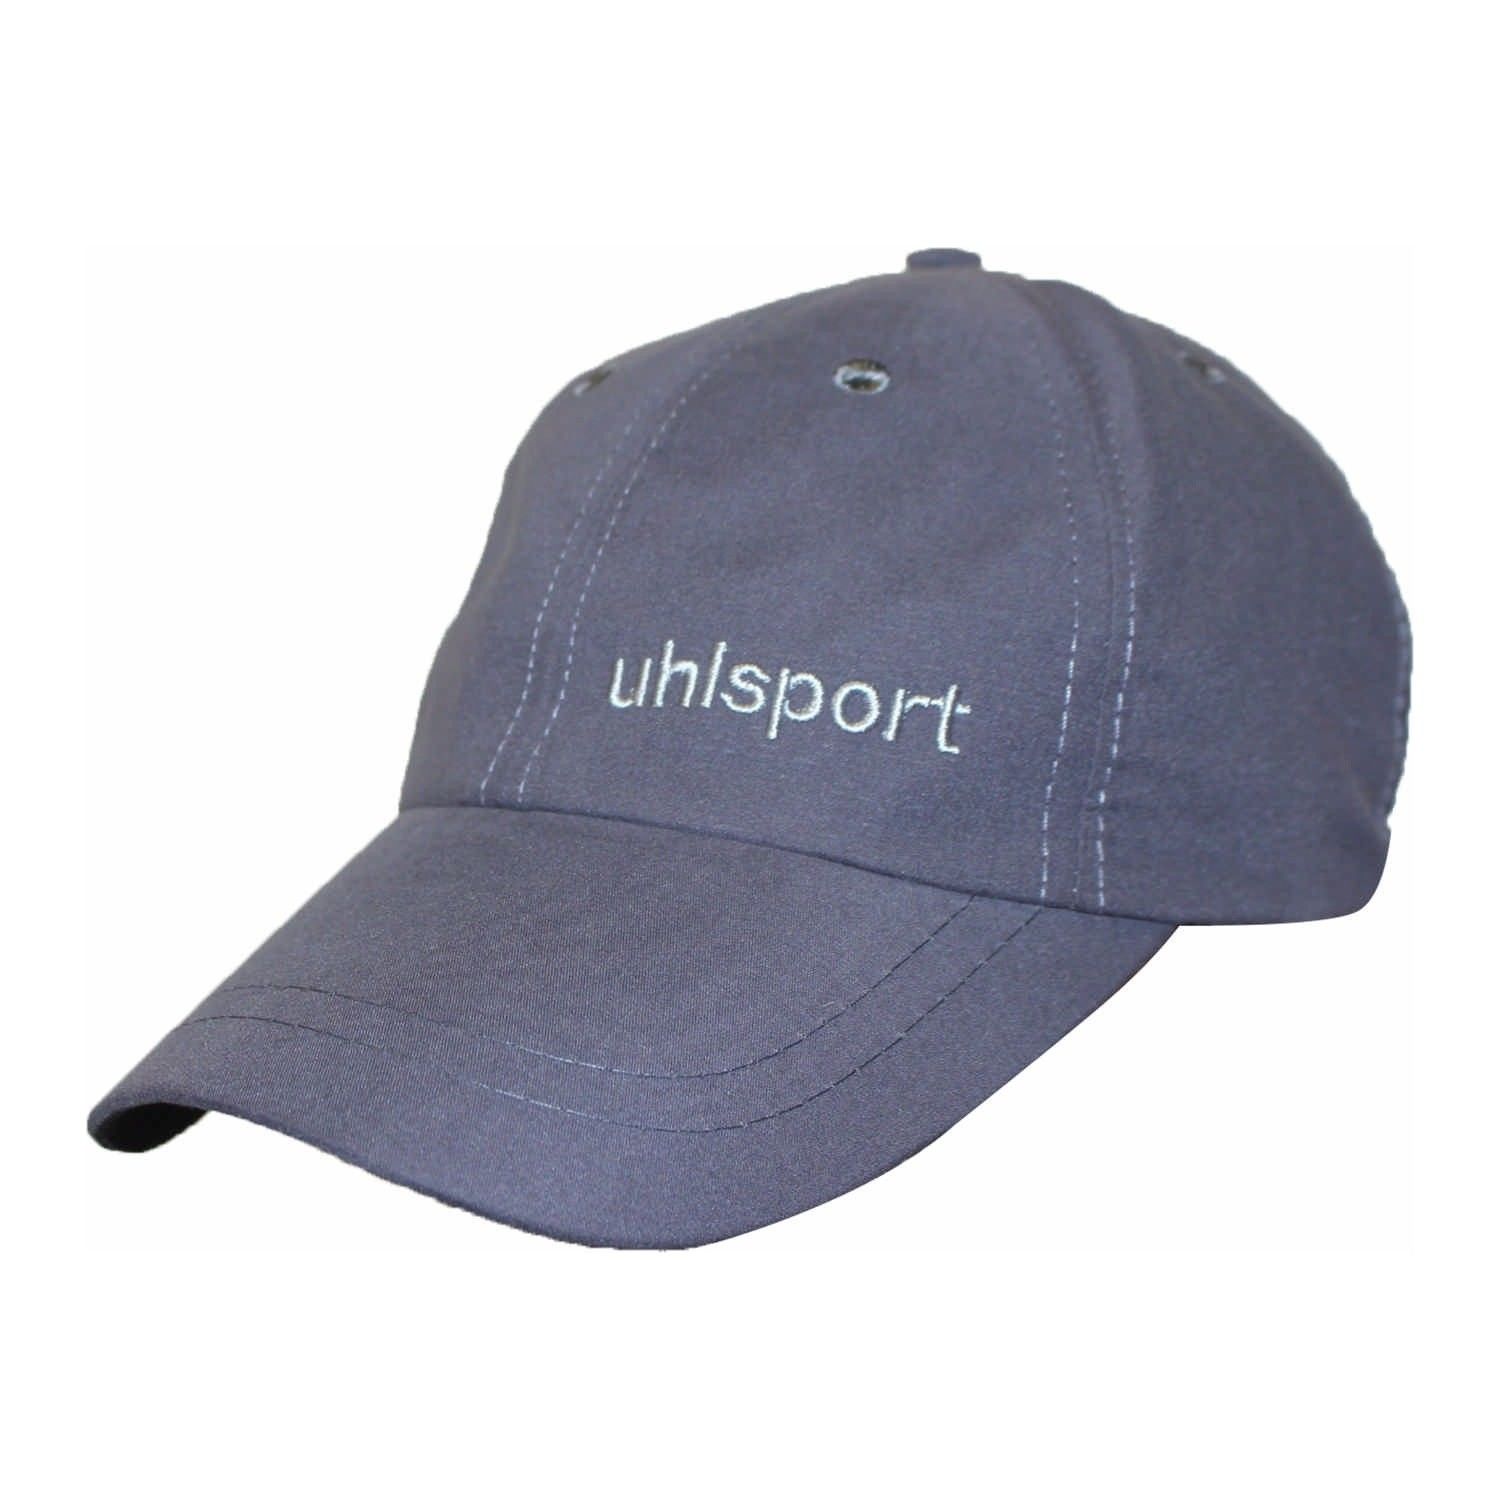 Uhlsport 8201010 20.008 Mıcro Leo Unisex Şapka Antrasit